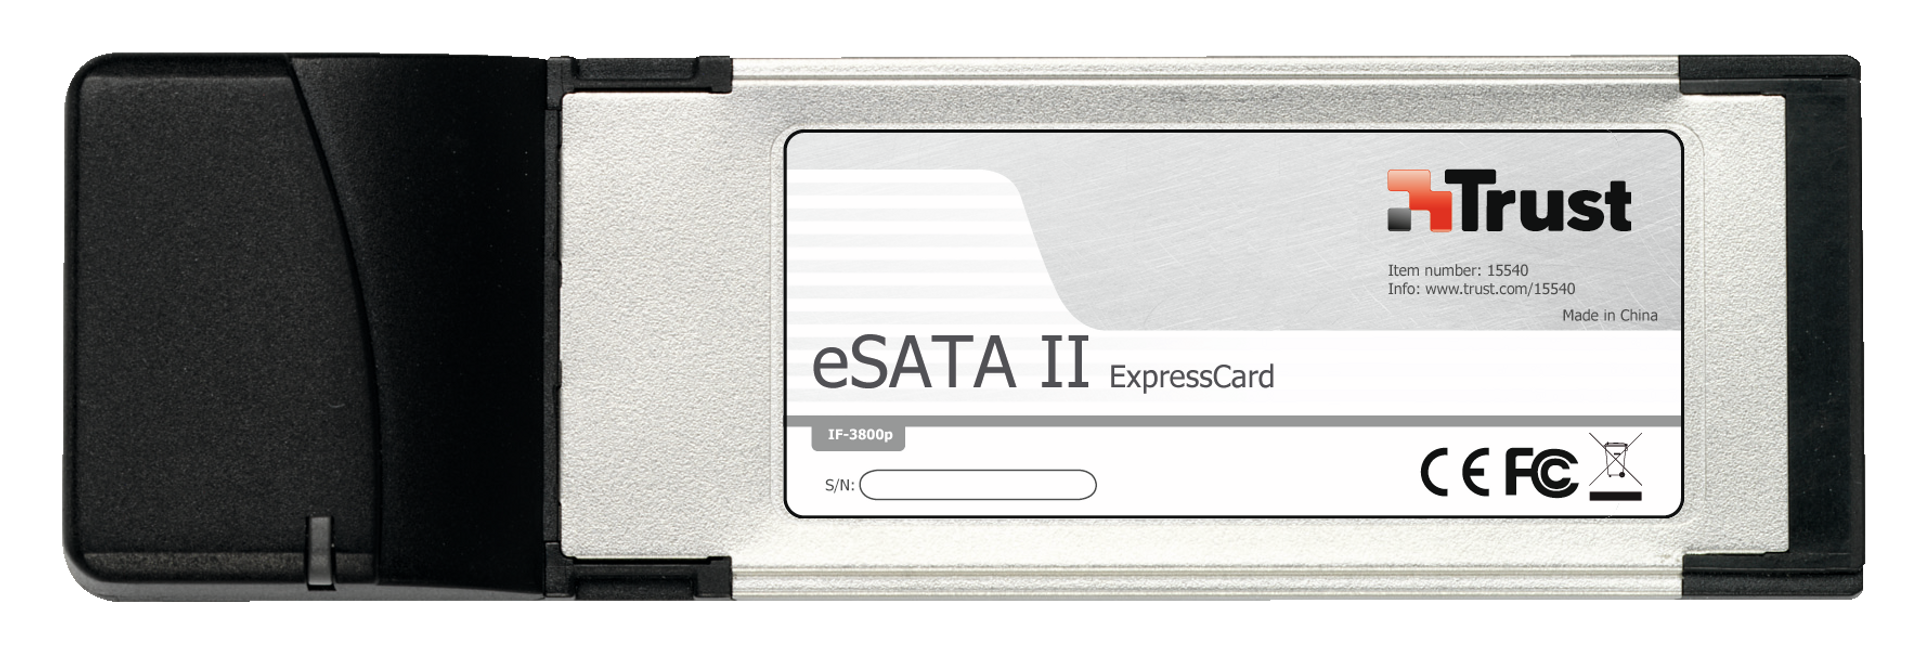 eSATA II ExpressCard IF-3800p-Top